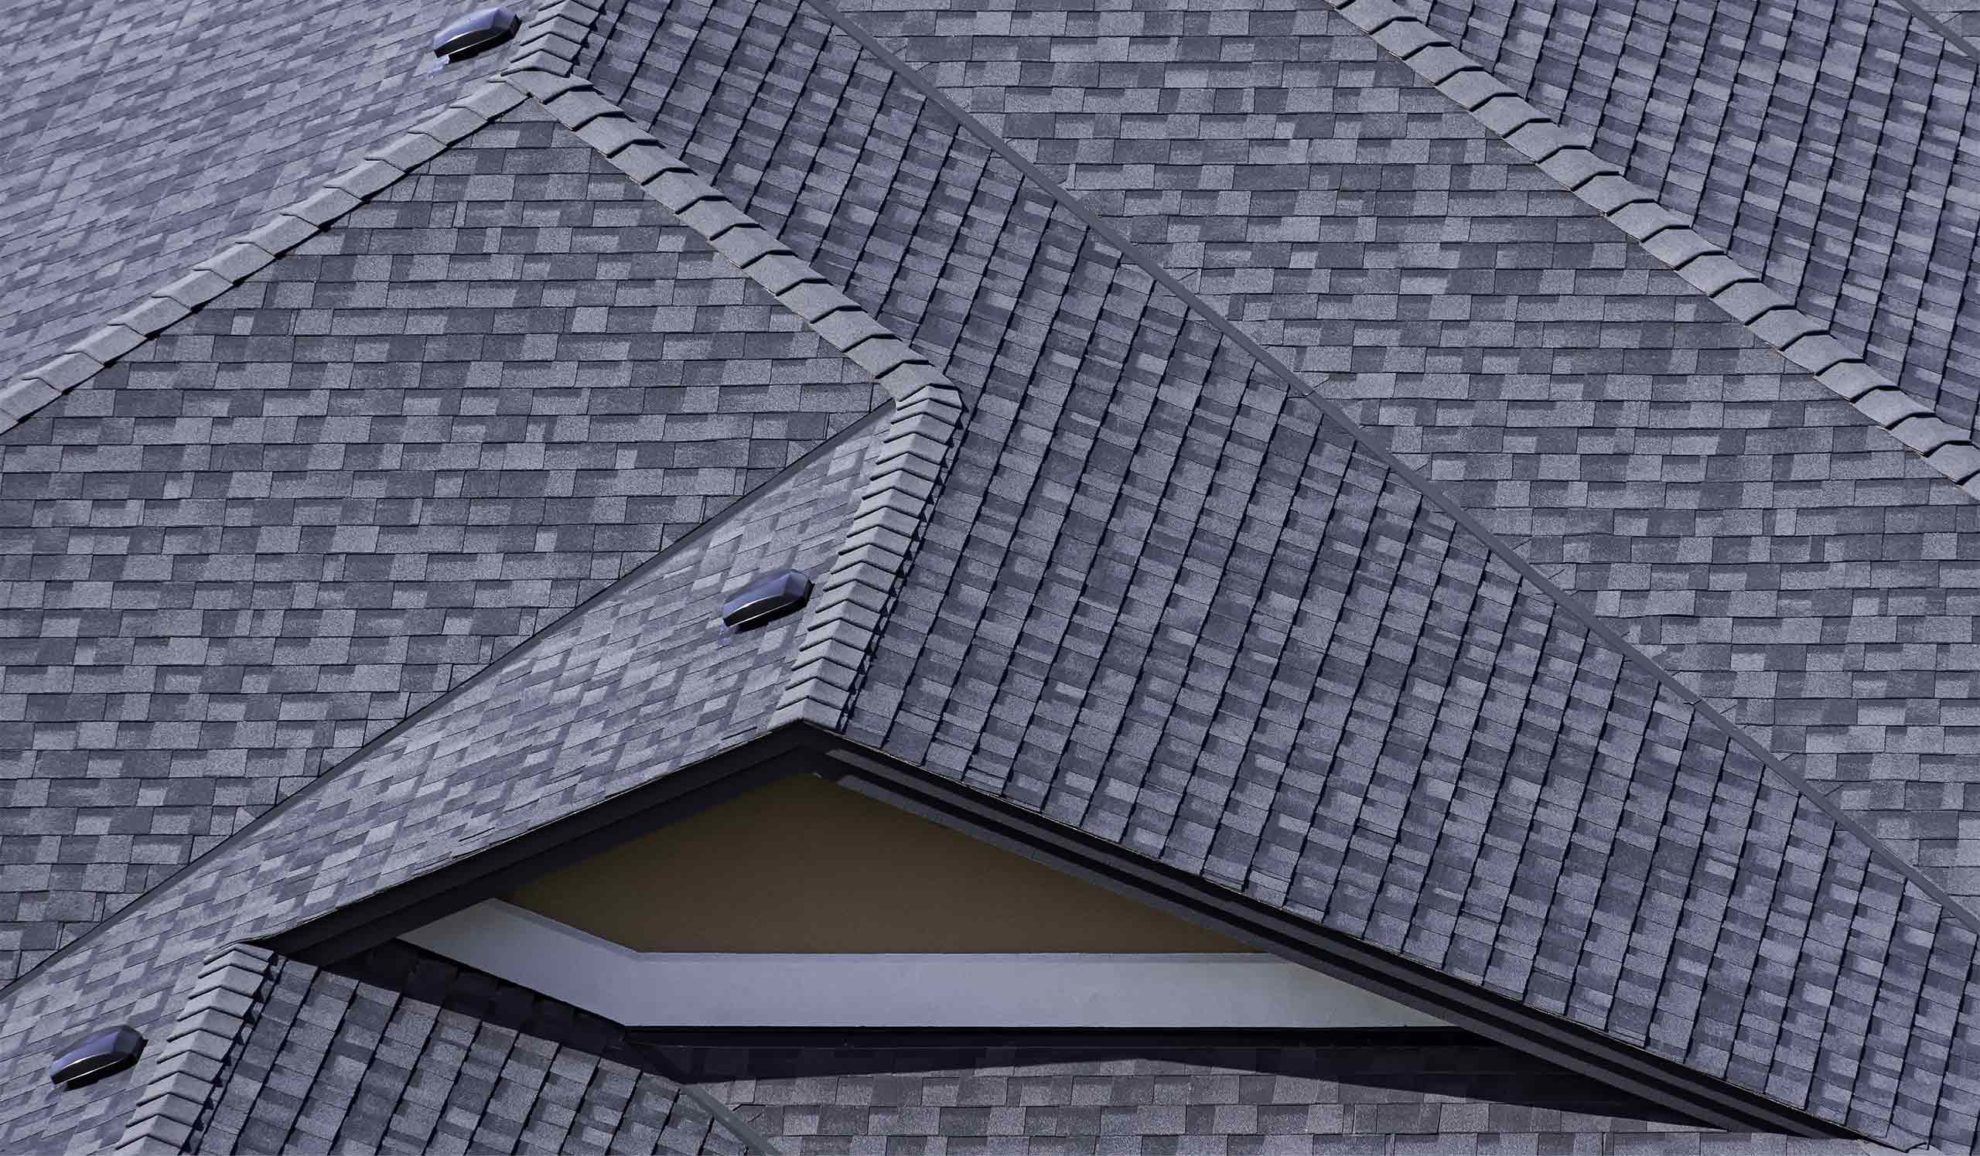 asphalt shingles roof installed at house roof close up woodstock ga